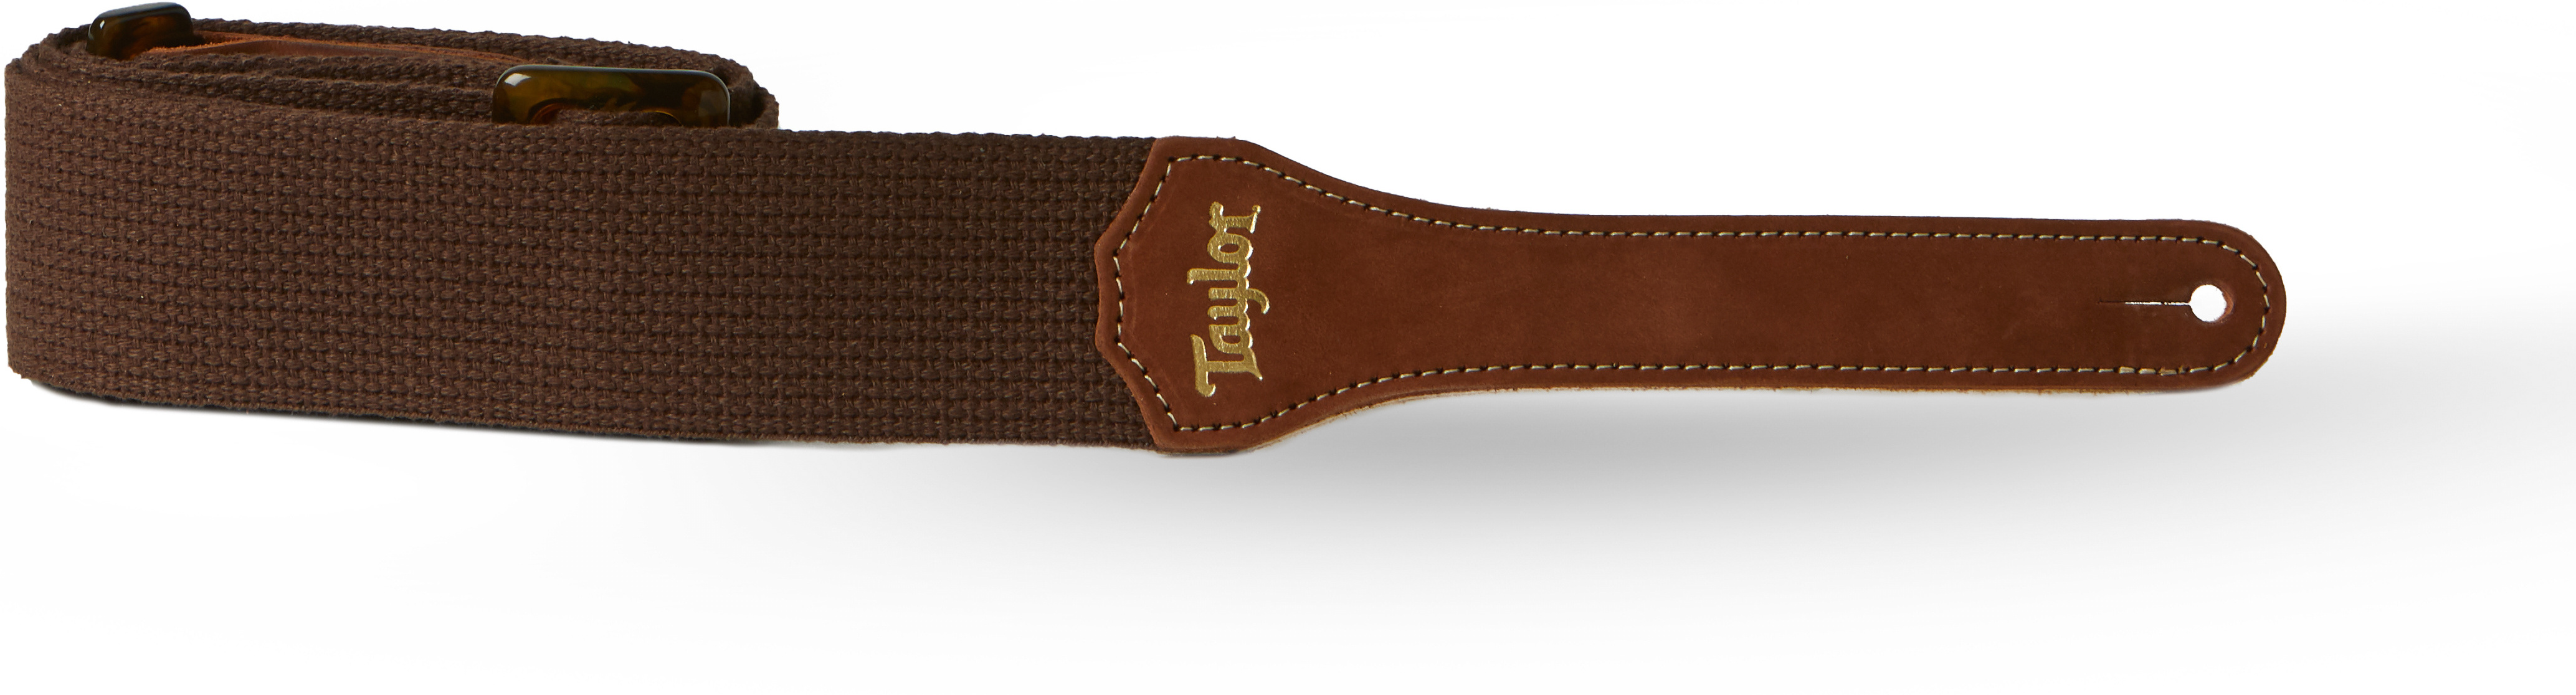 Taylor Gs Mini Strap Chocolate Brown Cotton 2inc - Guitar strap - Main picture